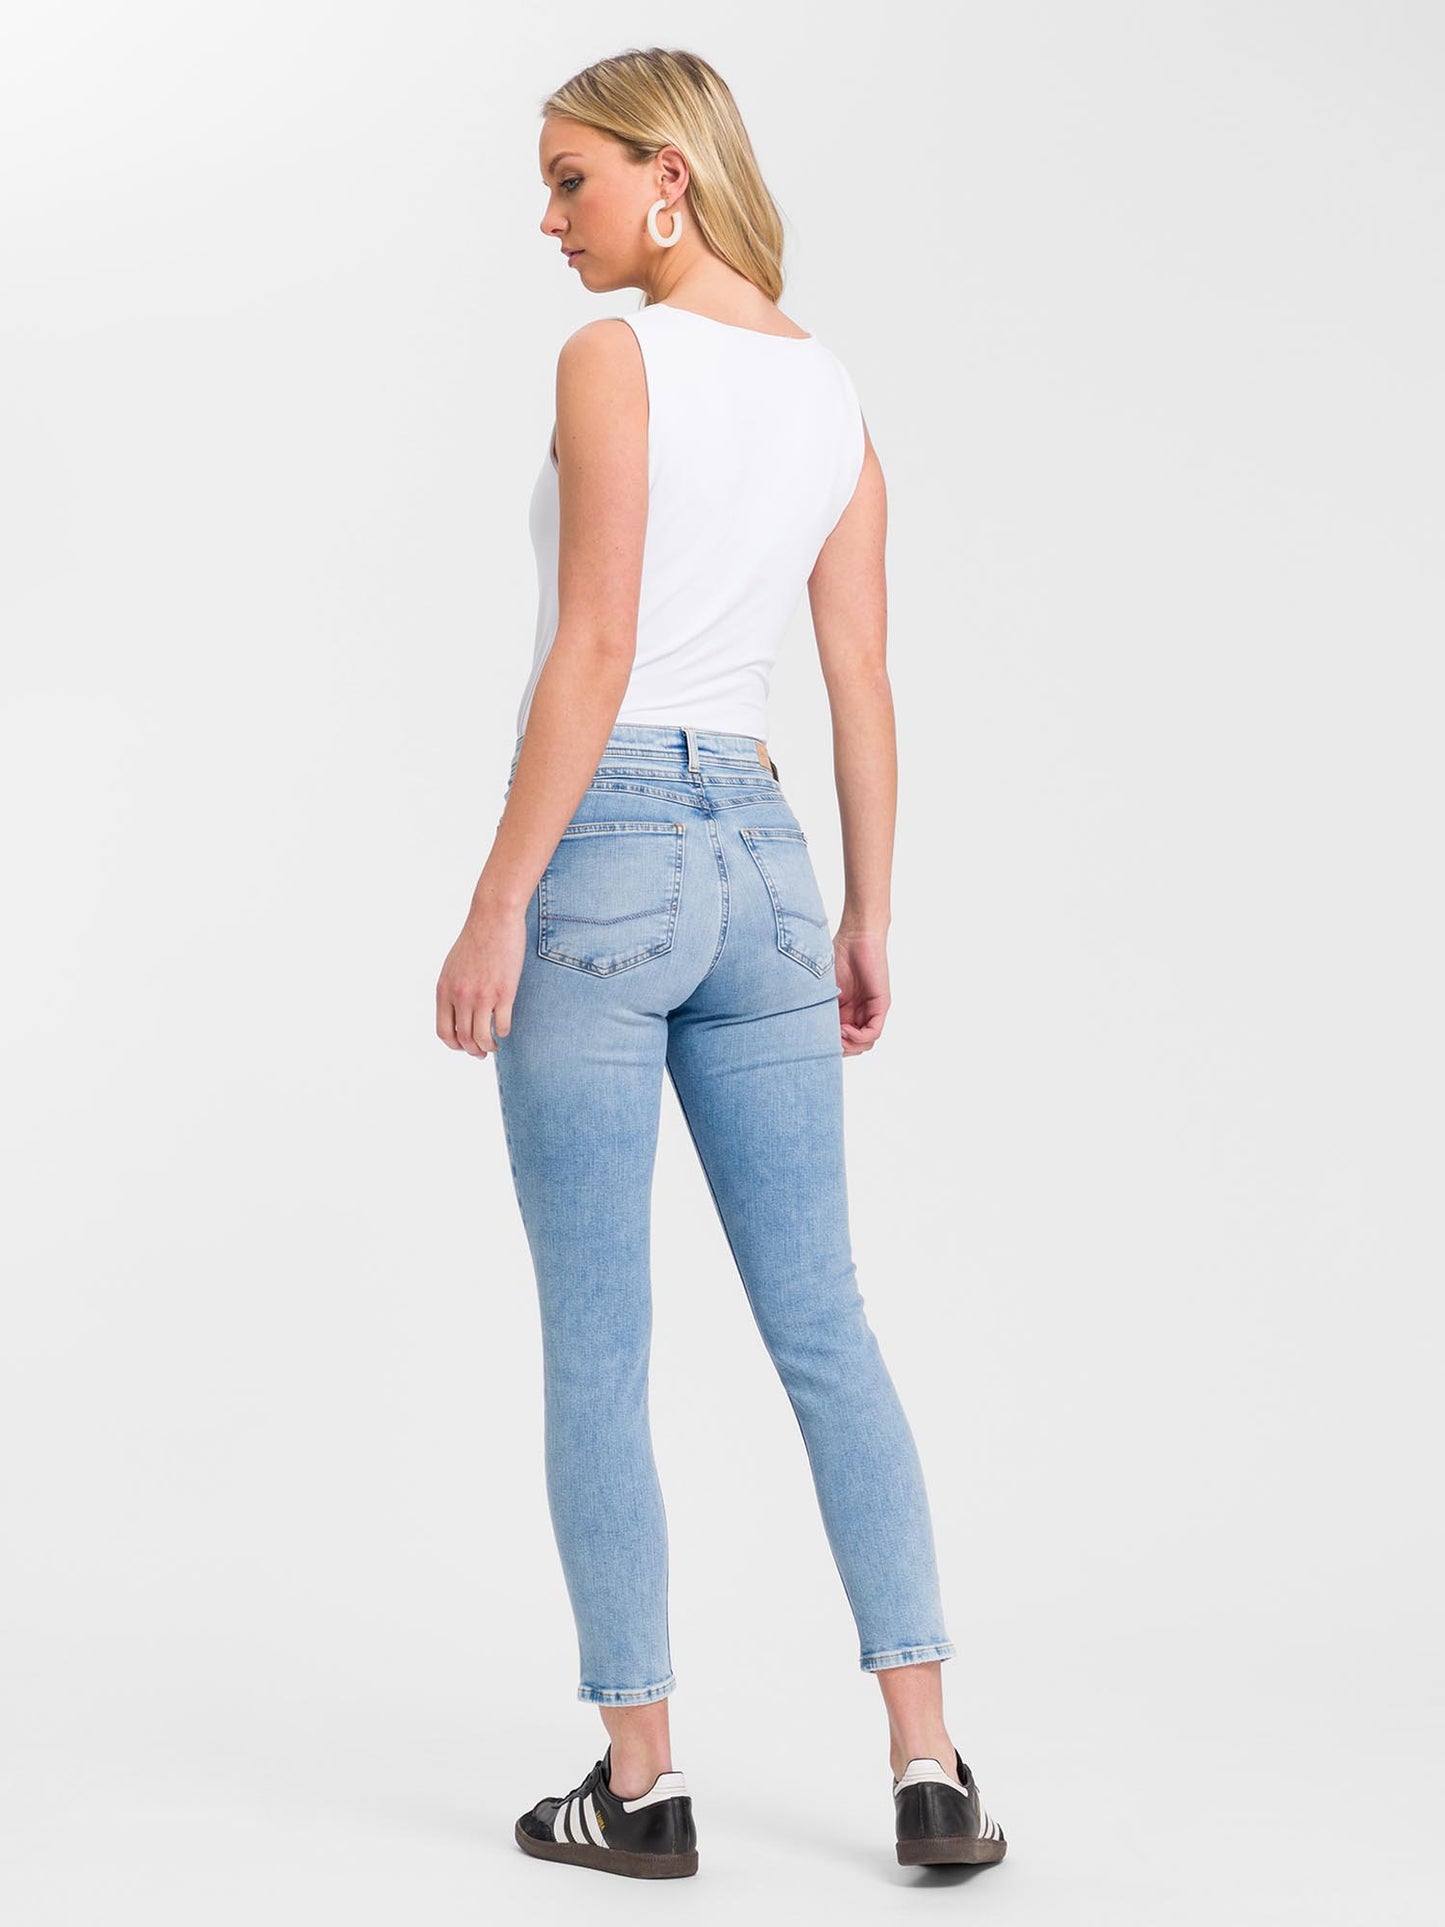 Judy women's jeans super skinny fit high waist ankle length light blue